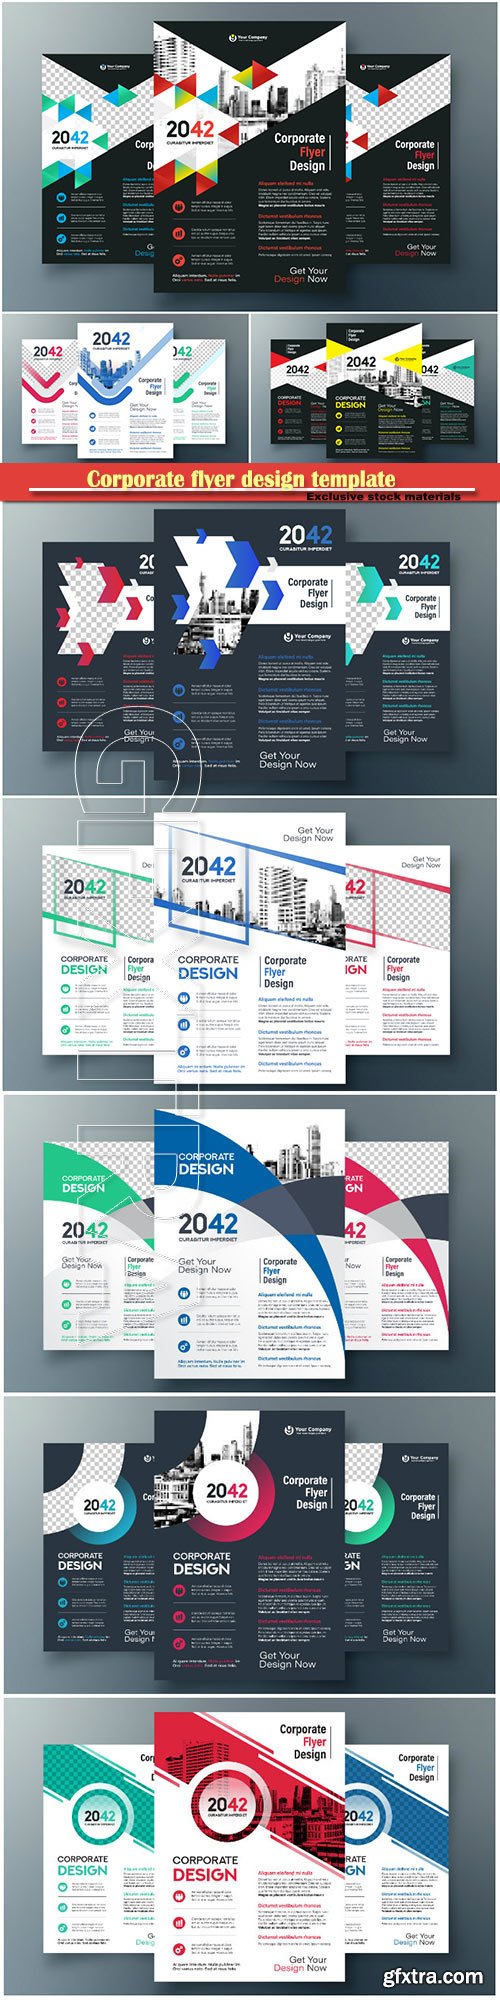 Corporate flyer design template, business vector design template